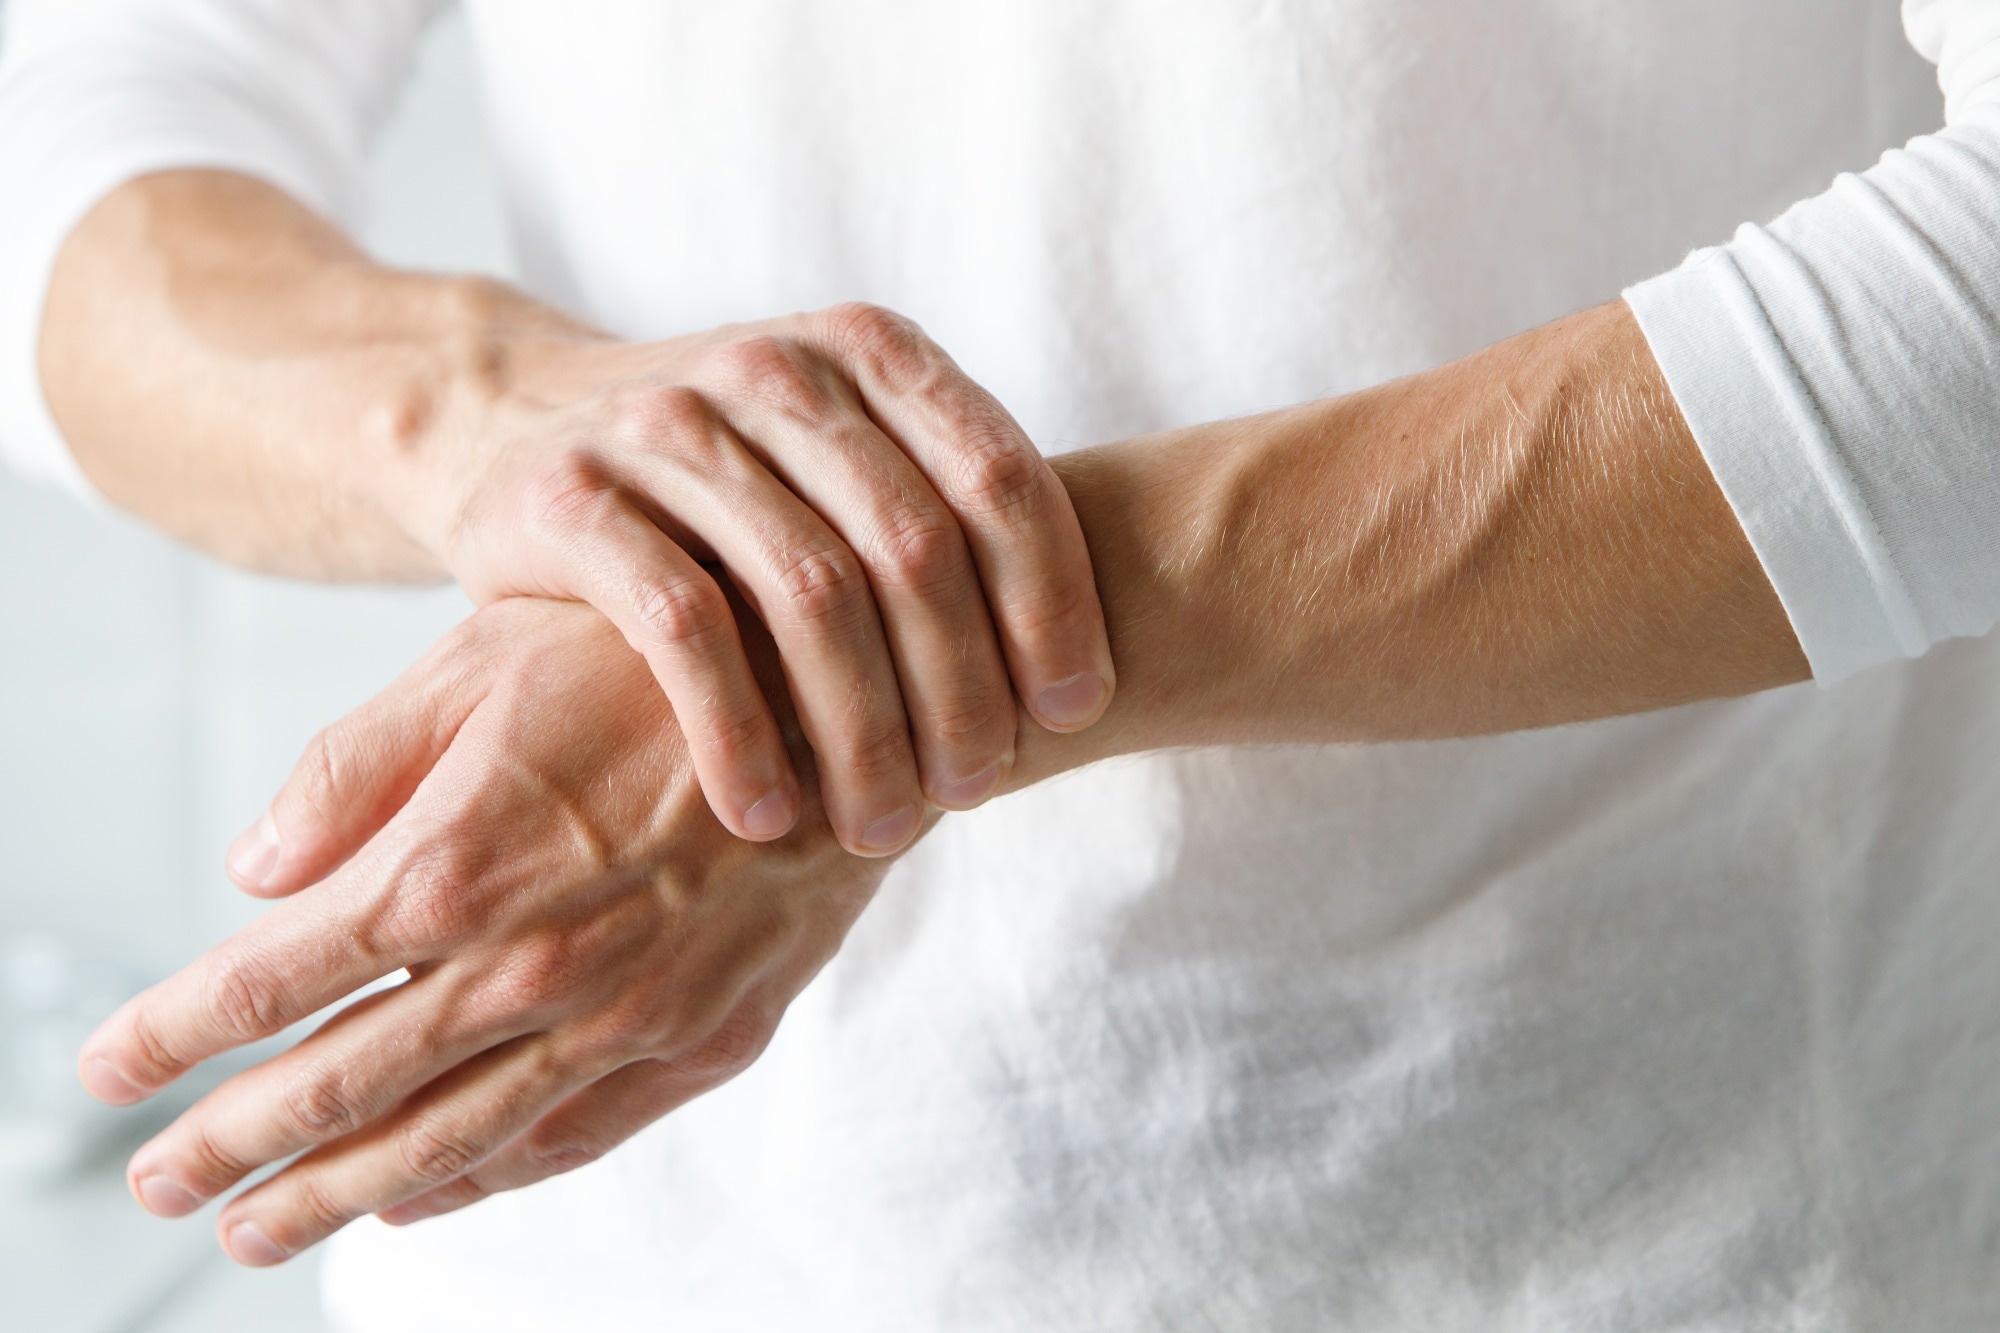 Studies show people taking rheumatoid arthritis drugs have a weaker response to the SARS-CoV-2 vaccine